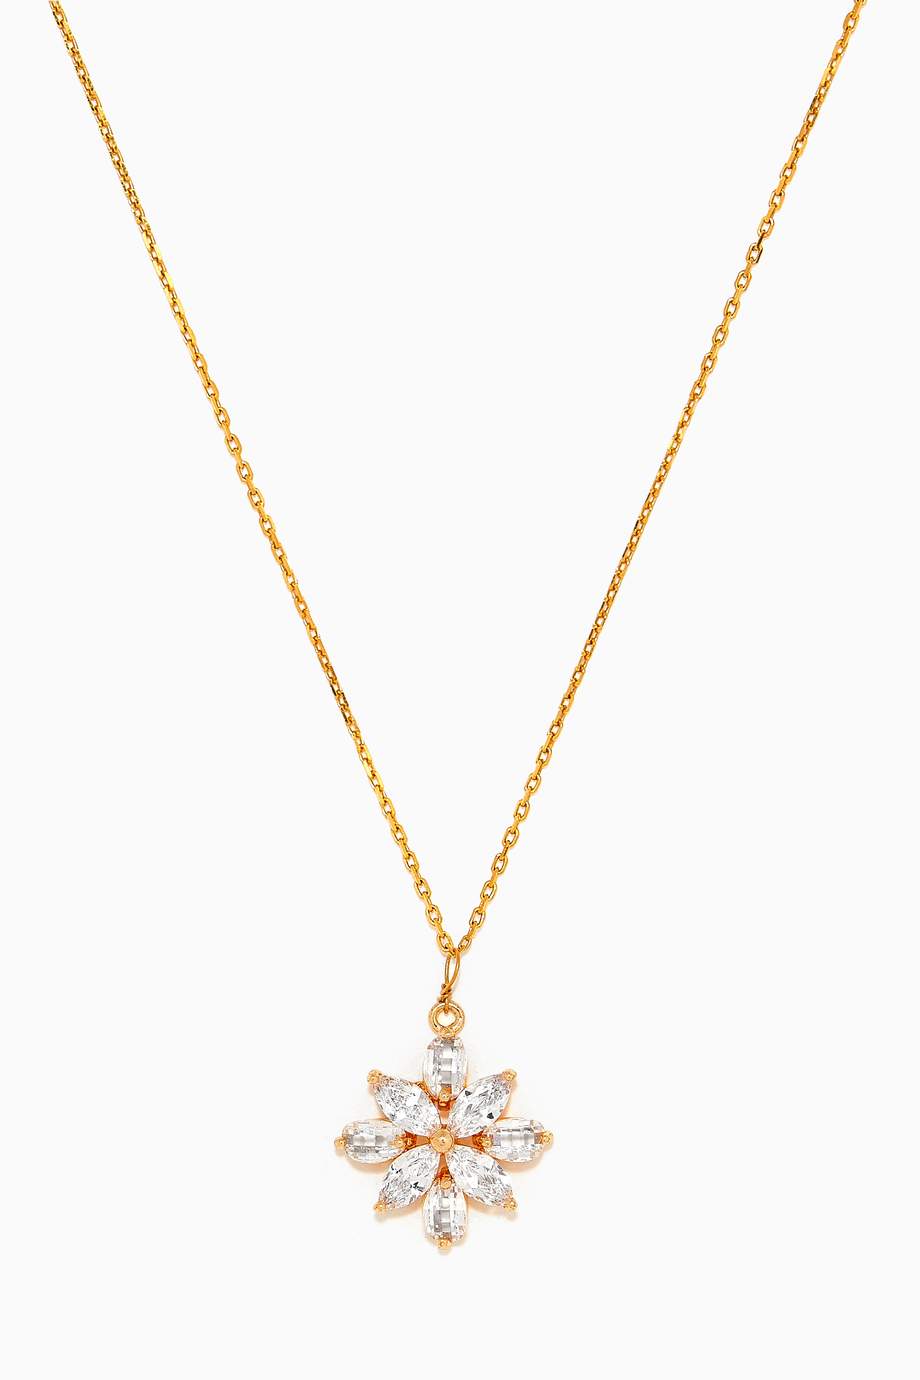 Shop The Jewels Jar Gold Jasmine Flower Pendant Necklace for Women ...